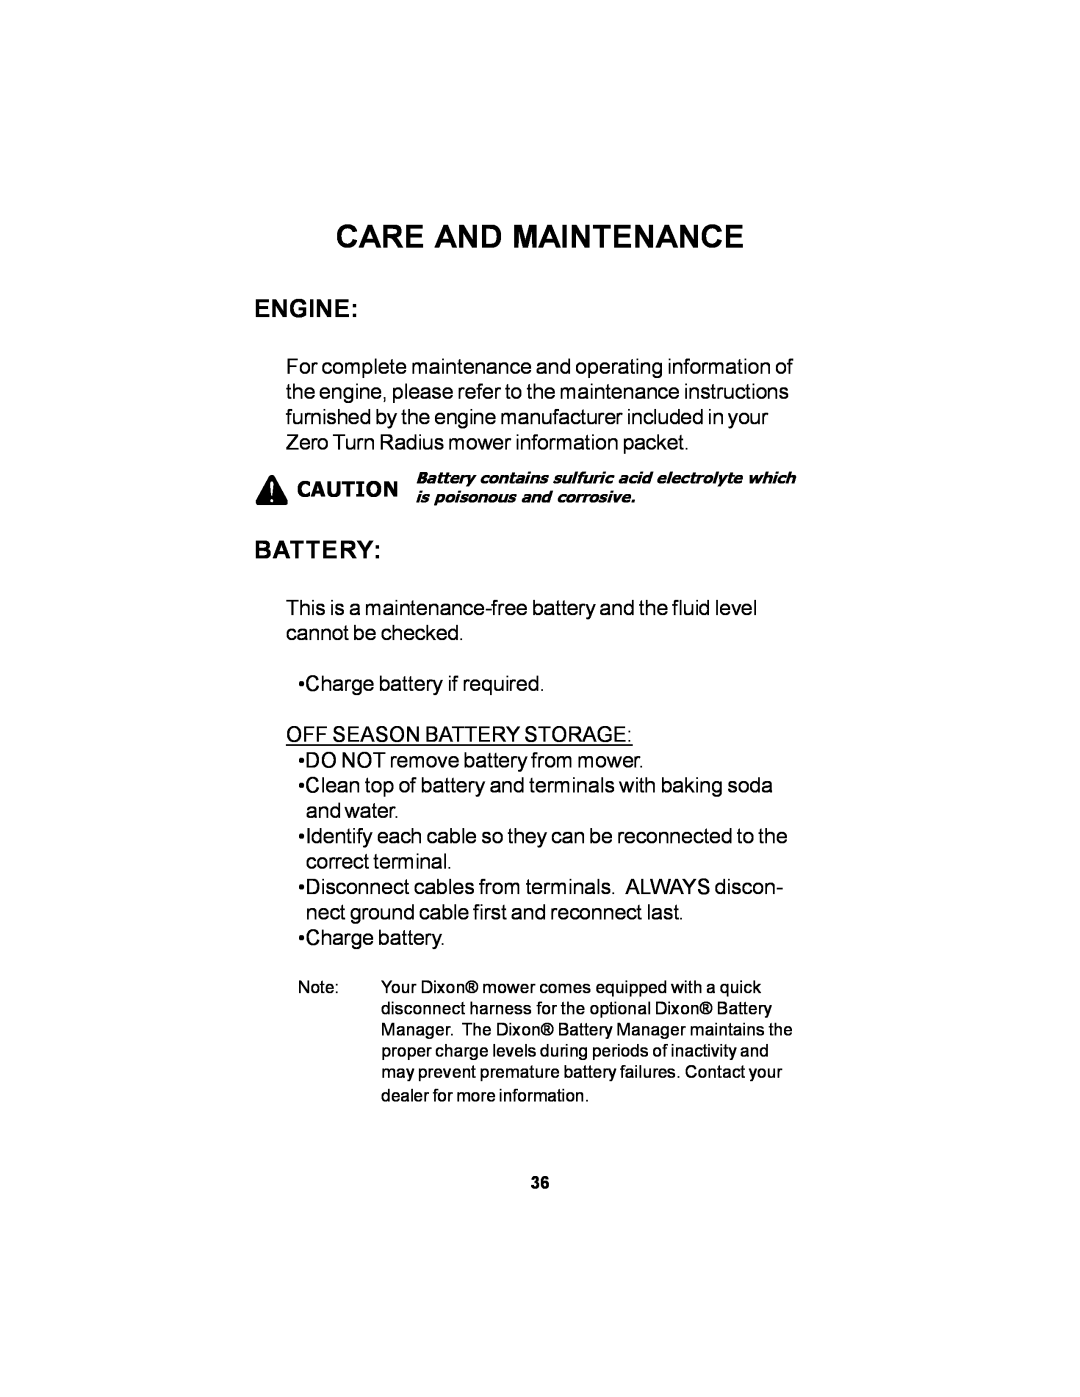 Dixon Black Bear manual Engine, Battery, Care And Maintenance 